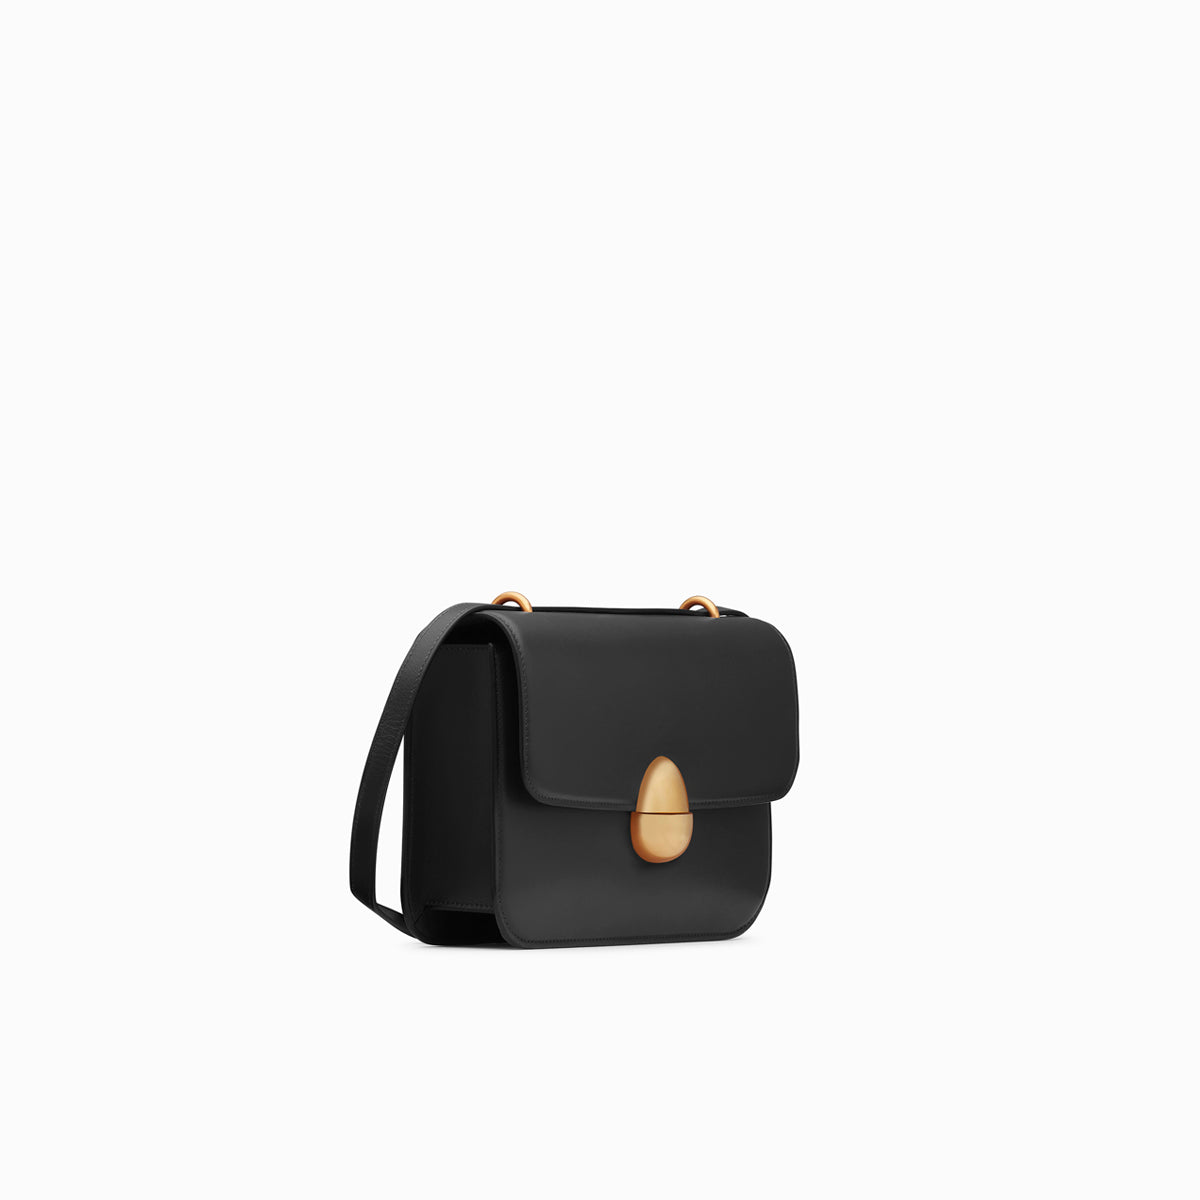 Neous Phoenix Box Leather Shoulder Bag in Black